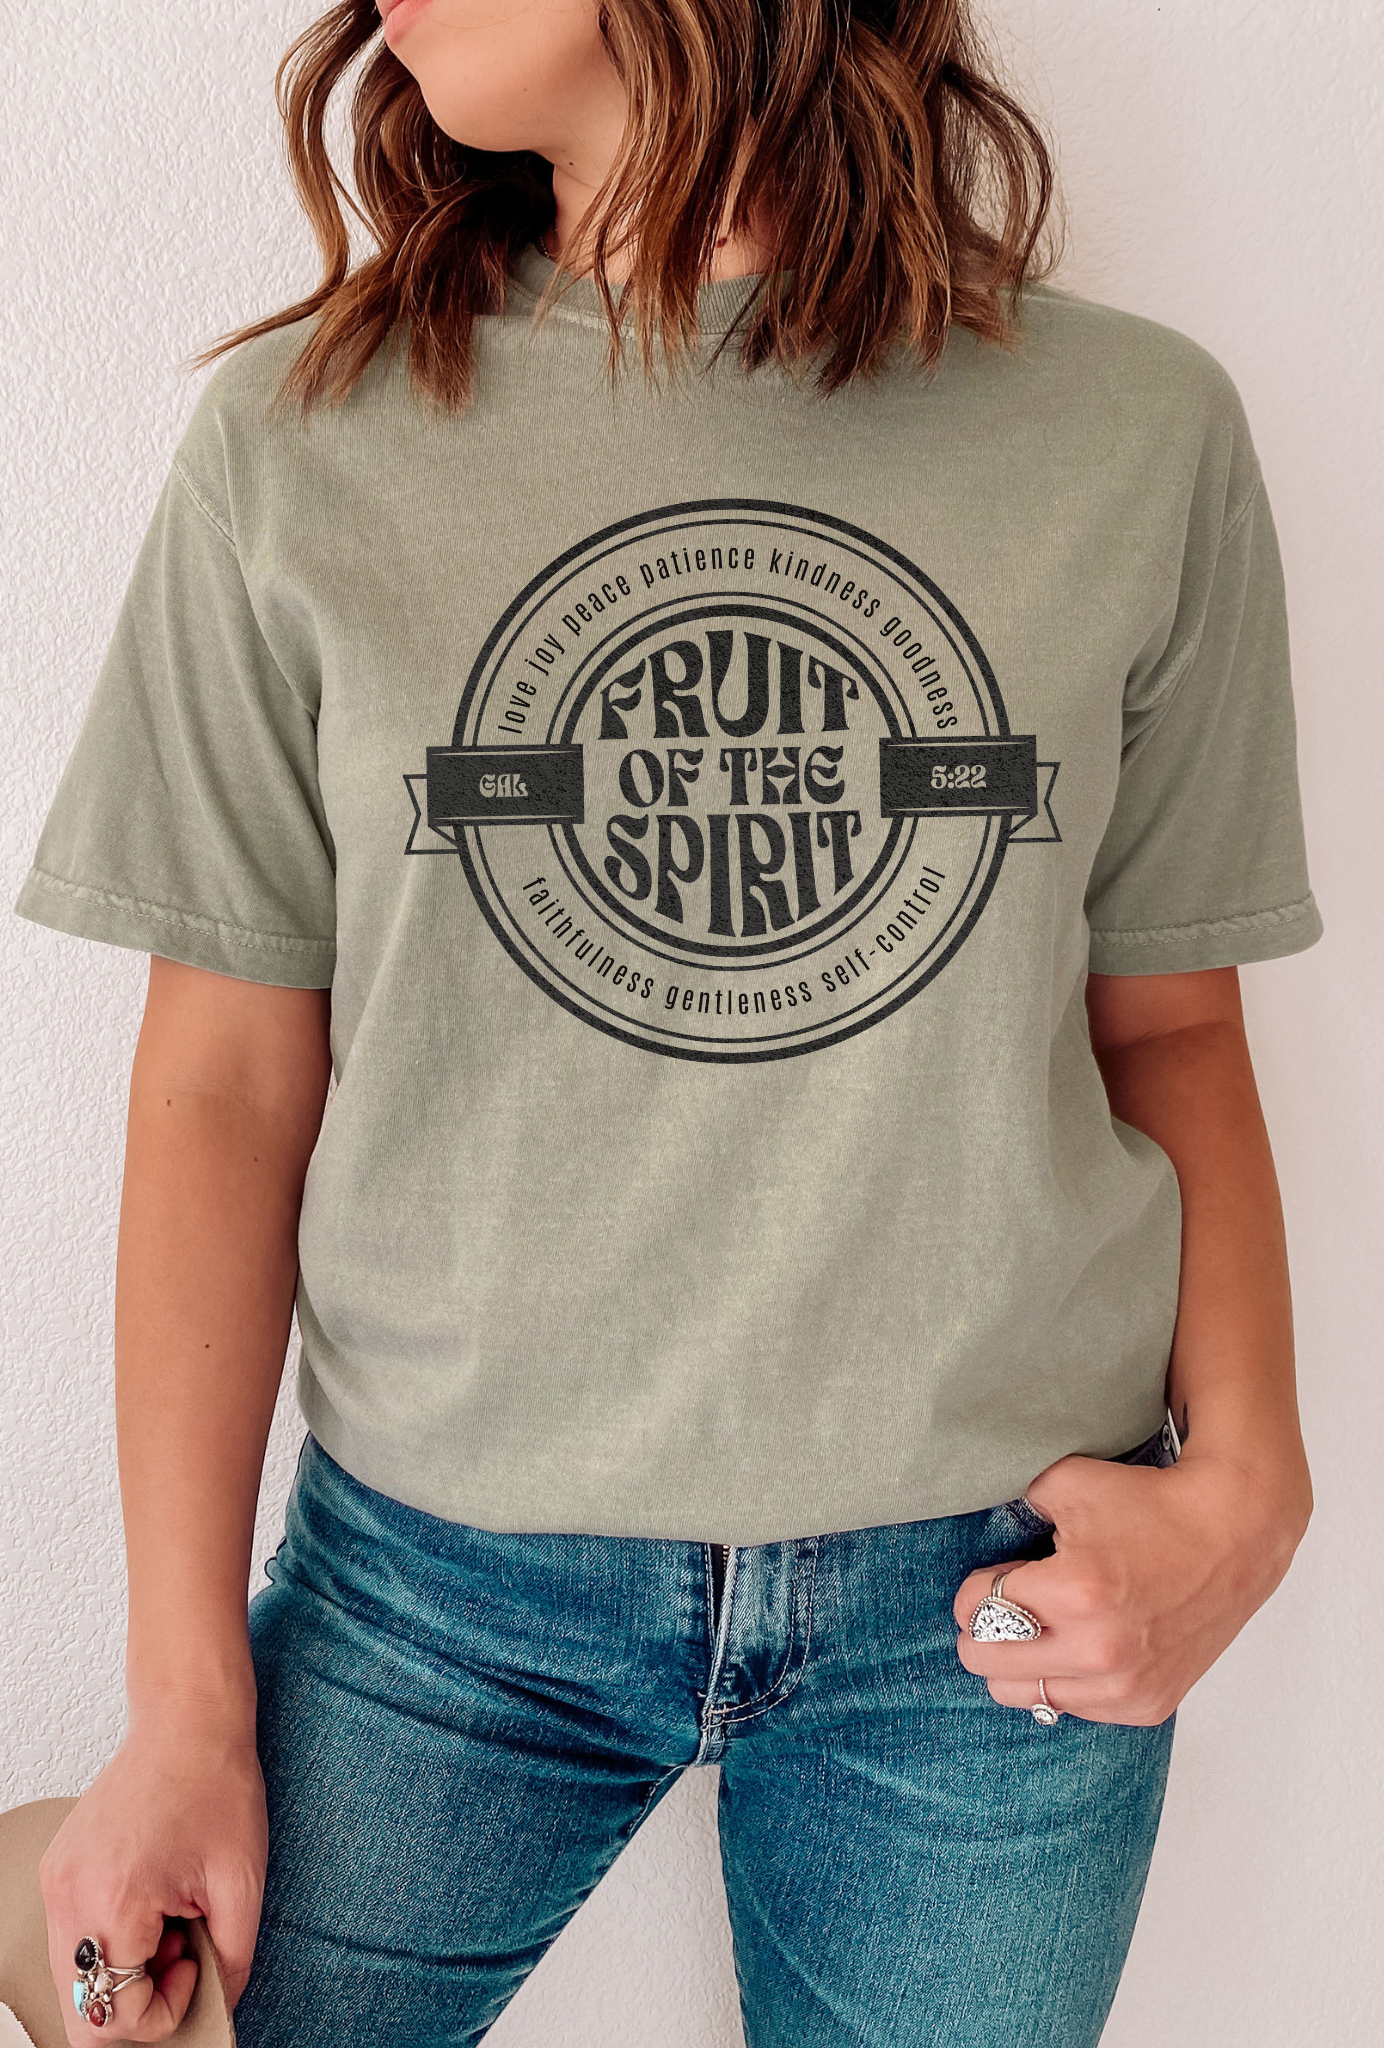 The Fruit Of the Spirit Christian Retro Graphic Tee, Unisex Garment-Dyed T-shirt